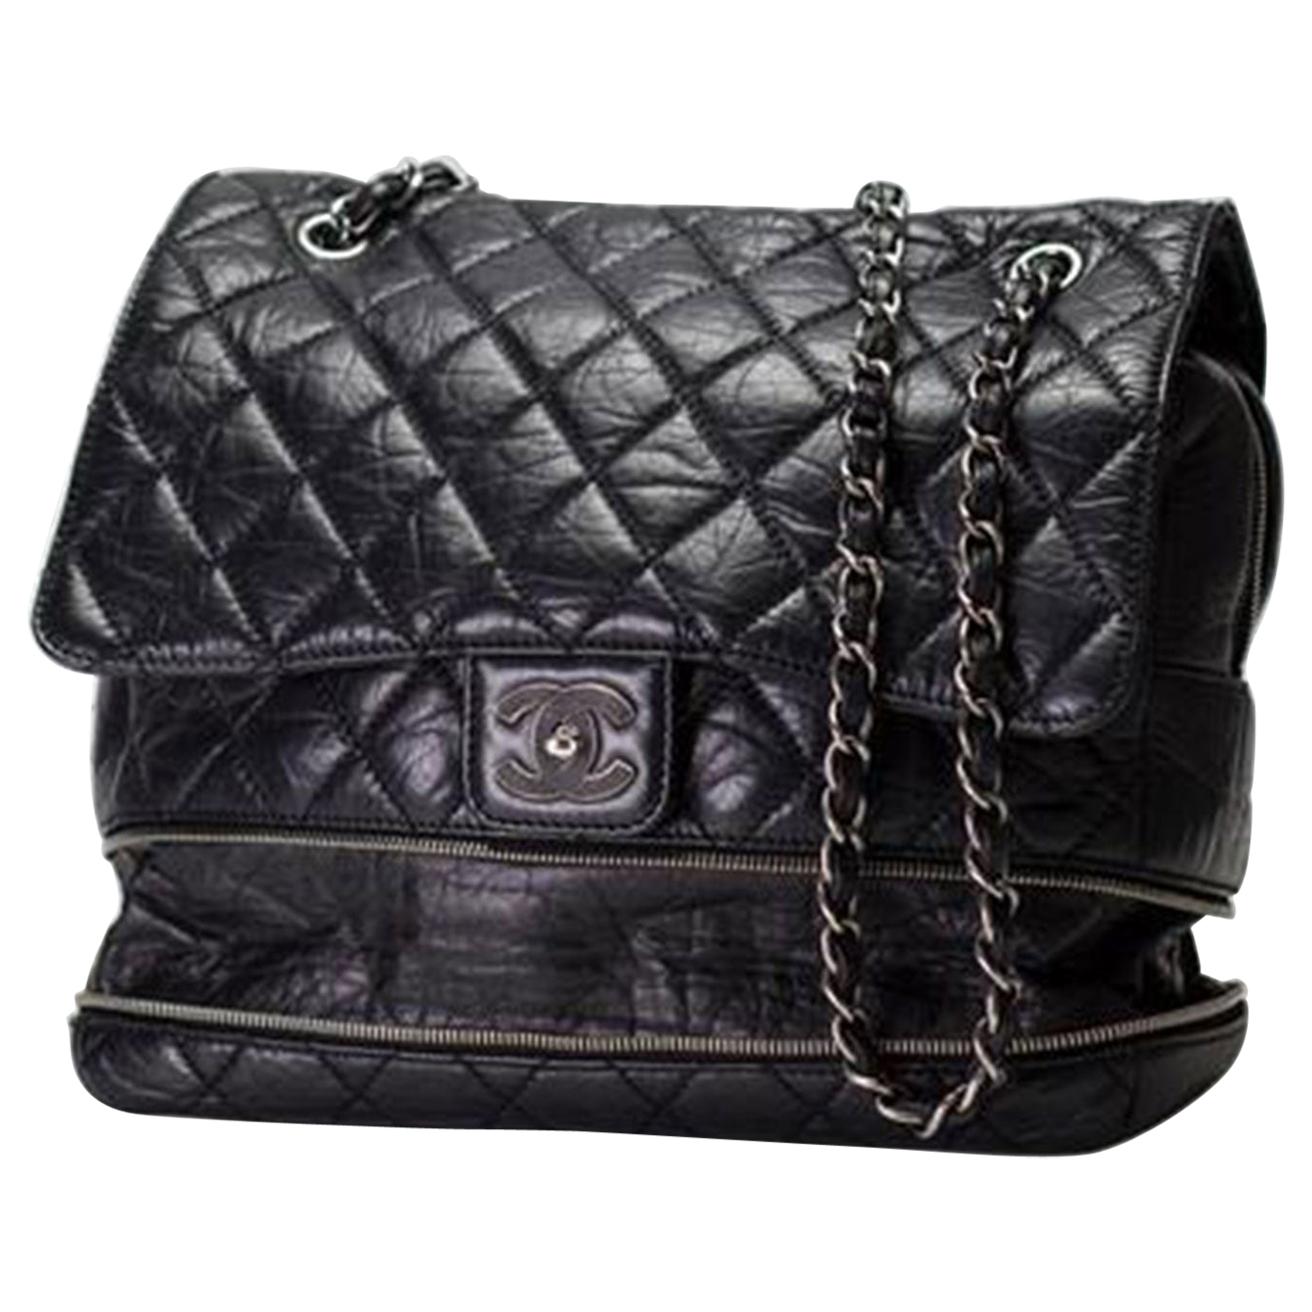 Chanel Classic Flap Limited Edition Pny Jumbo Expandable Calfskin Maxi Black Bag